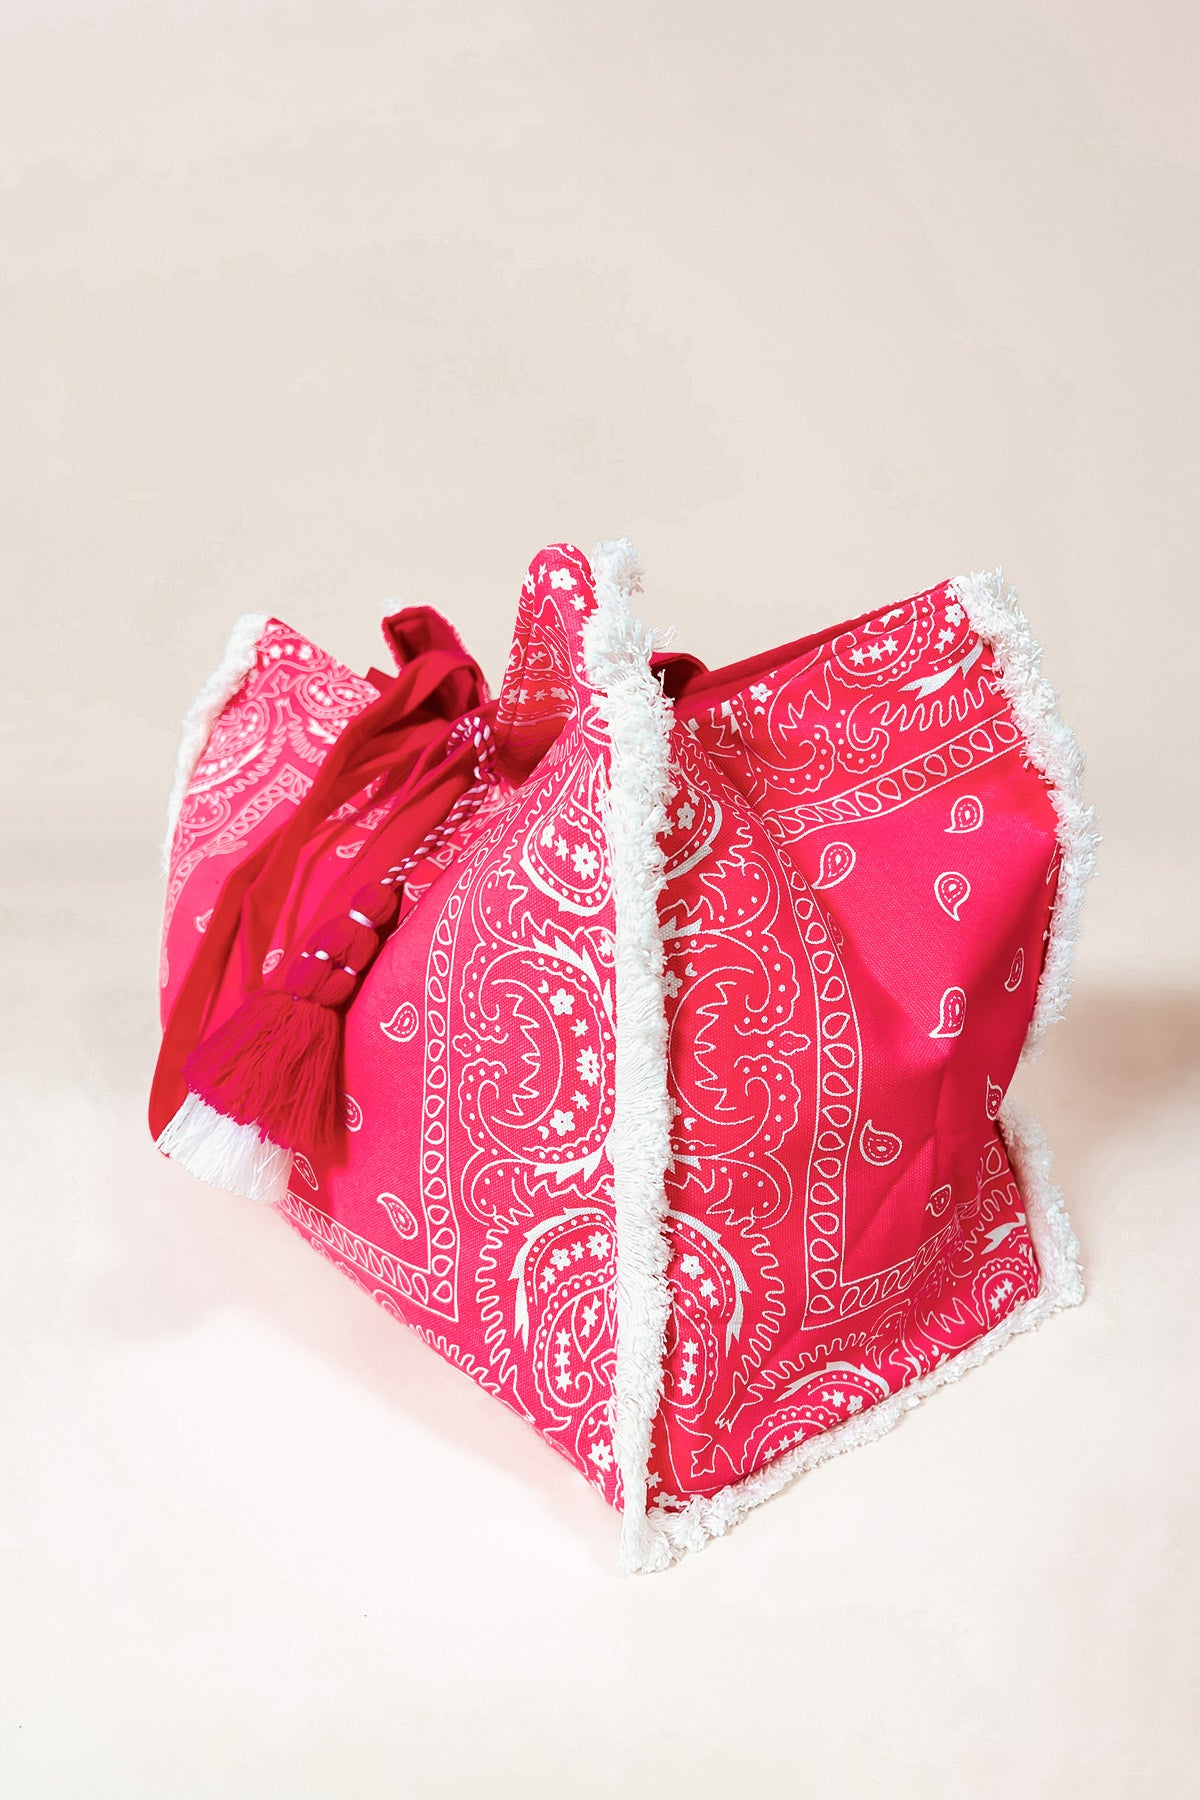 Bandana Bag Pink